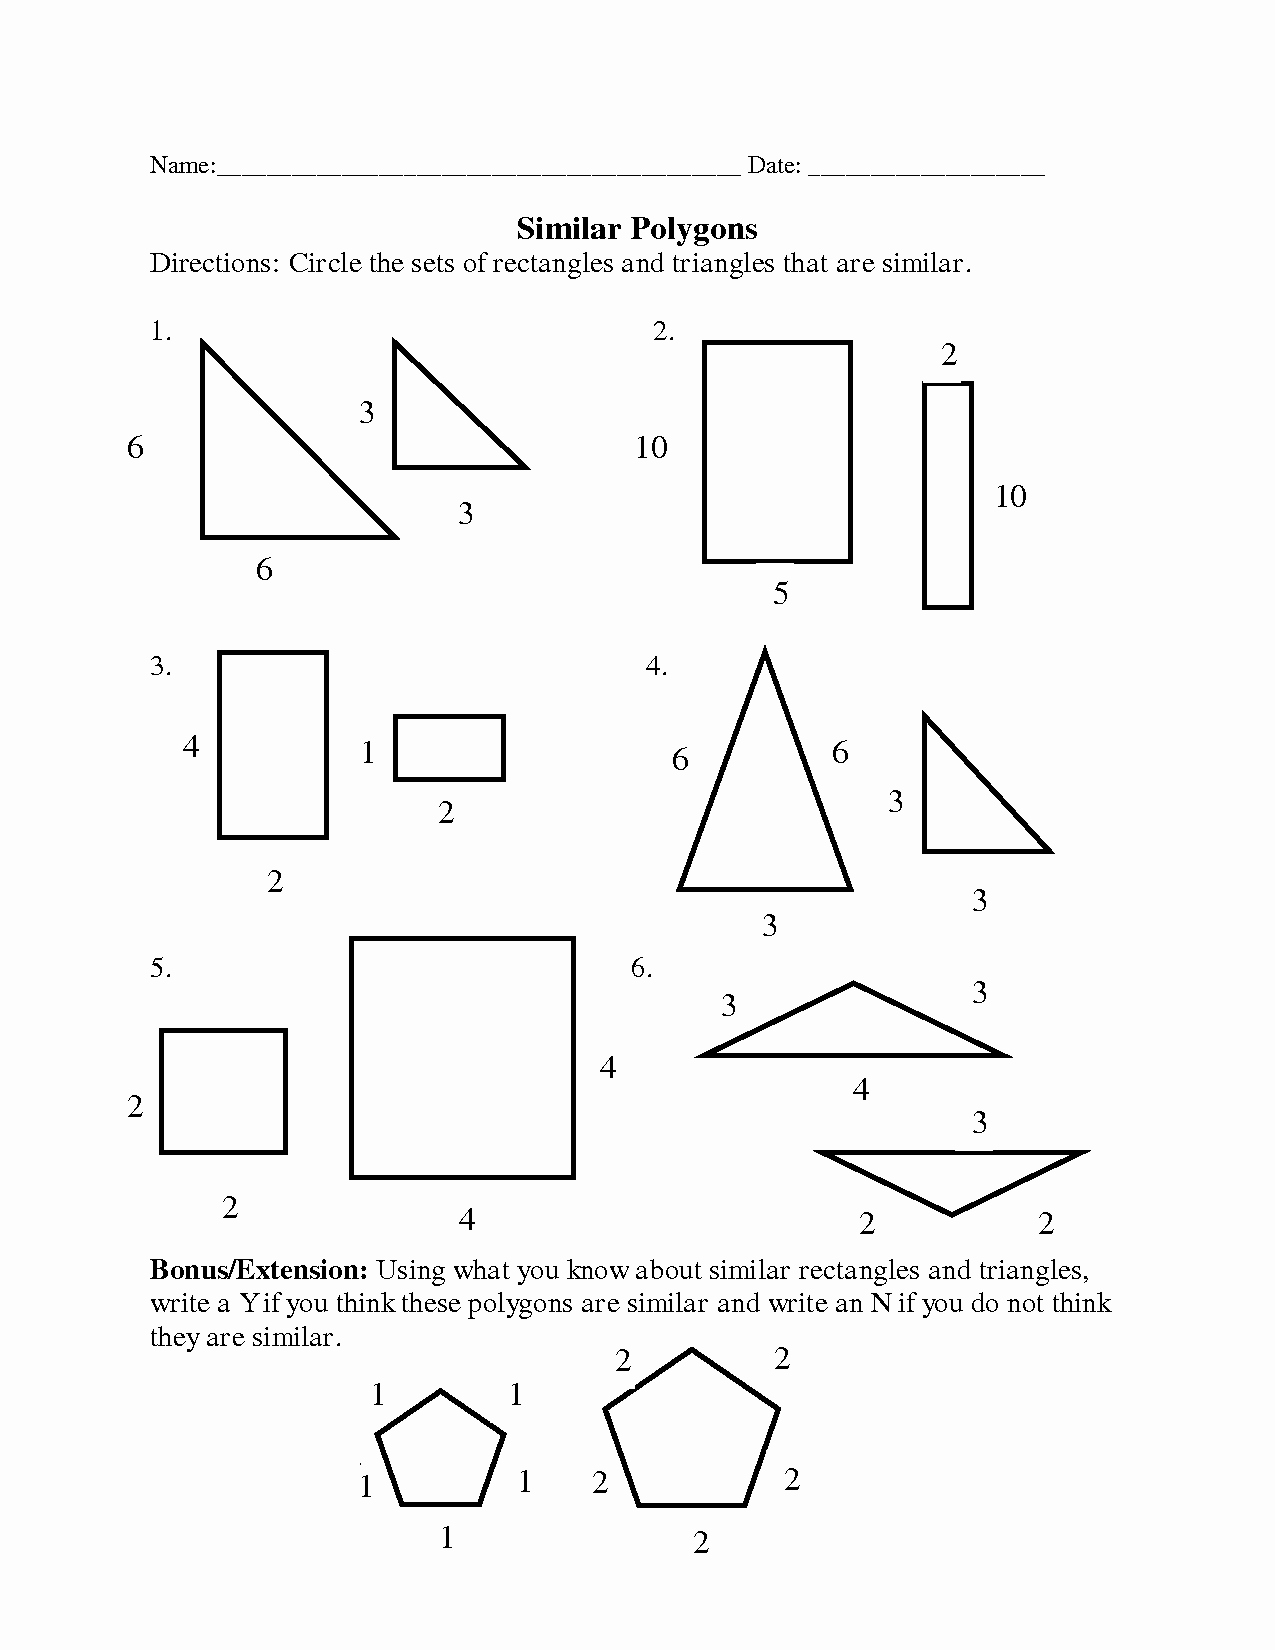 Similar Polygons Worksheet Answers Beautiful Similar Polygons Worksheet Answers